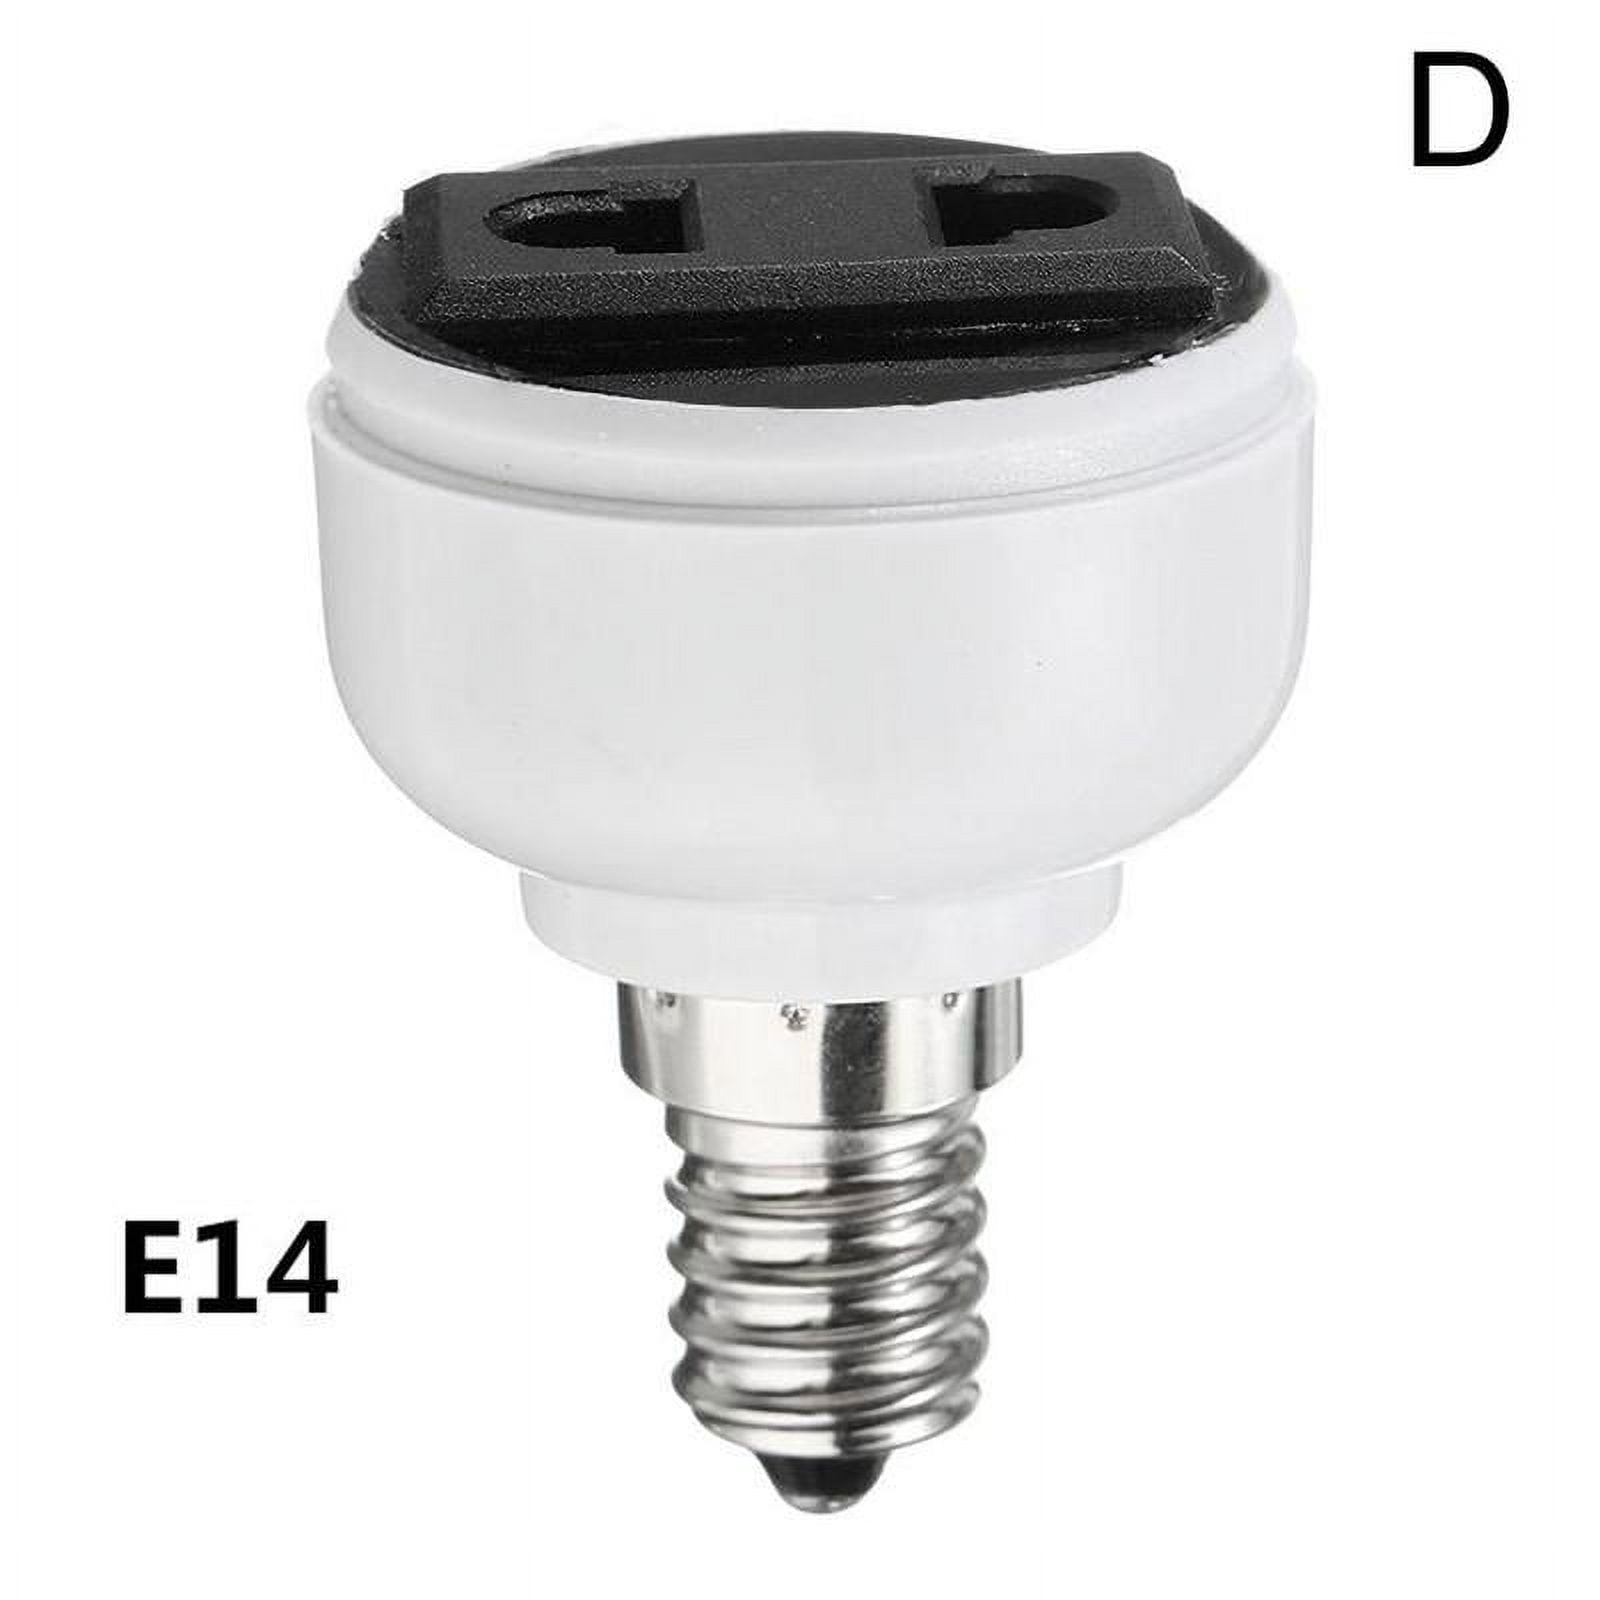 1pc E27 Socket Light Bulb Lamp Base Connector Holder Adapter Plug